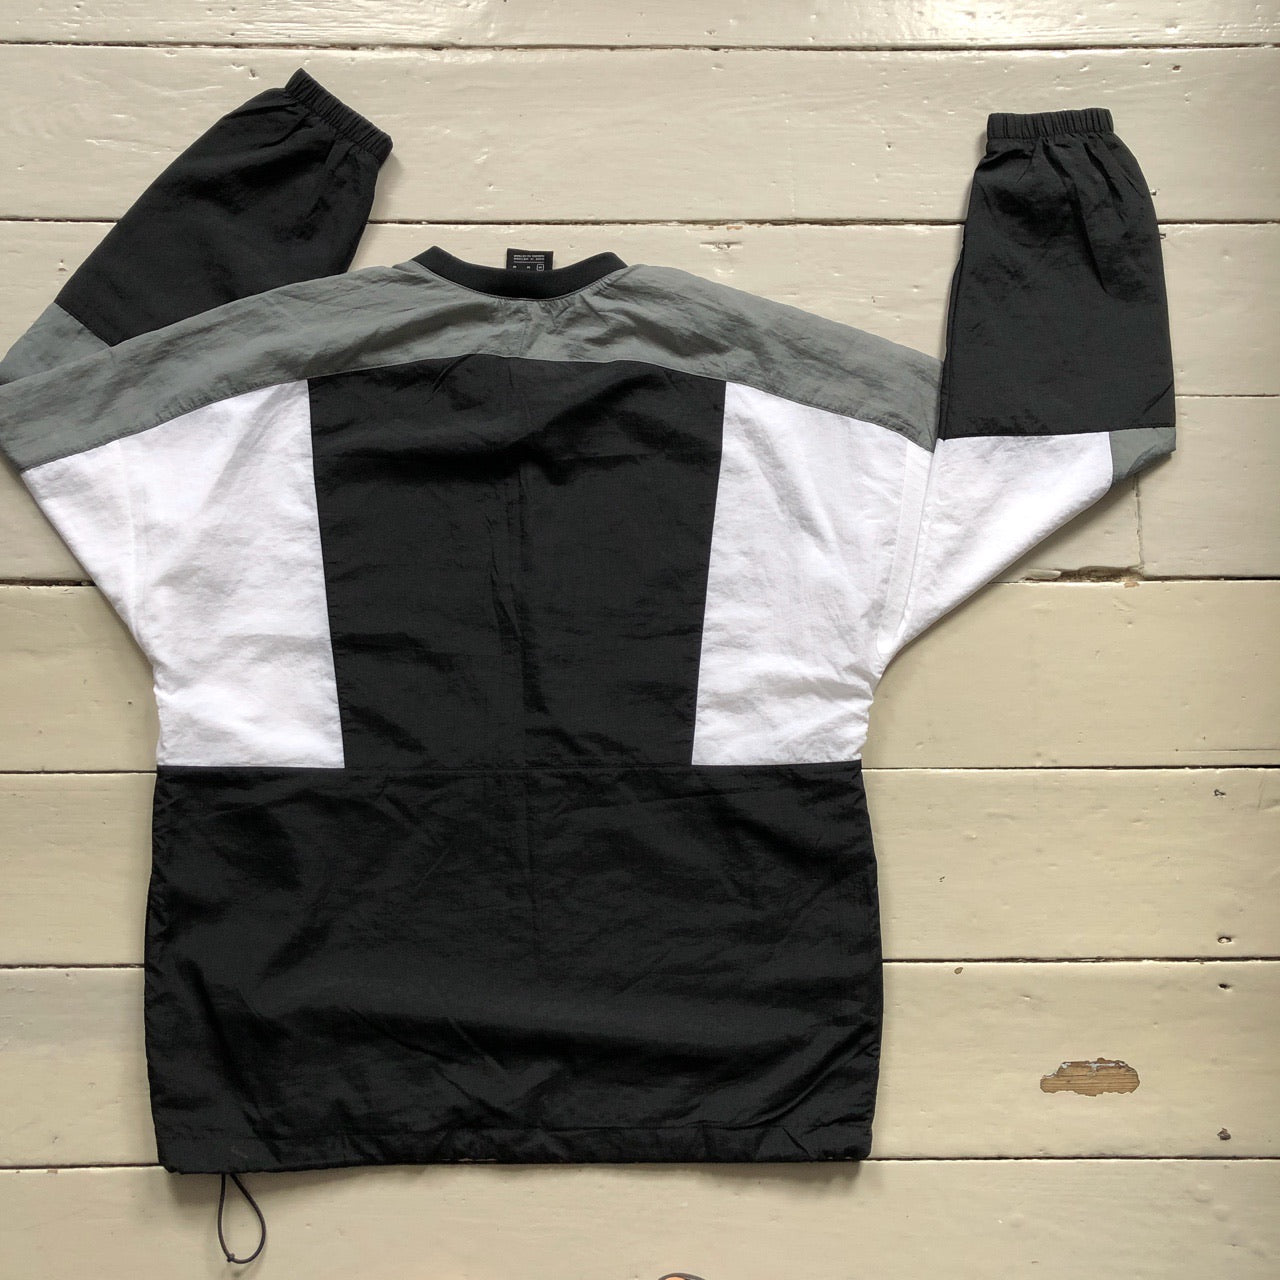 Nike Woven Shell Sweatshirt (Medium)